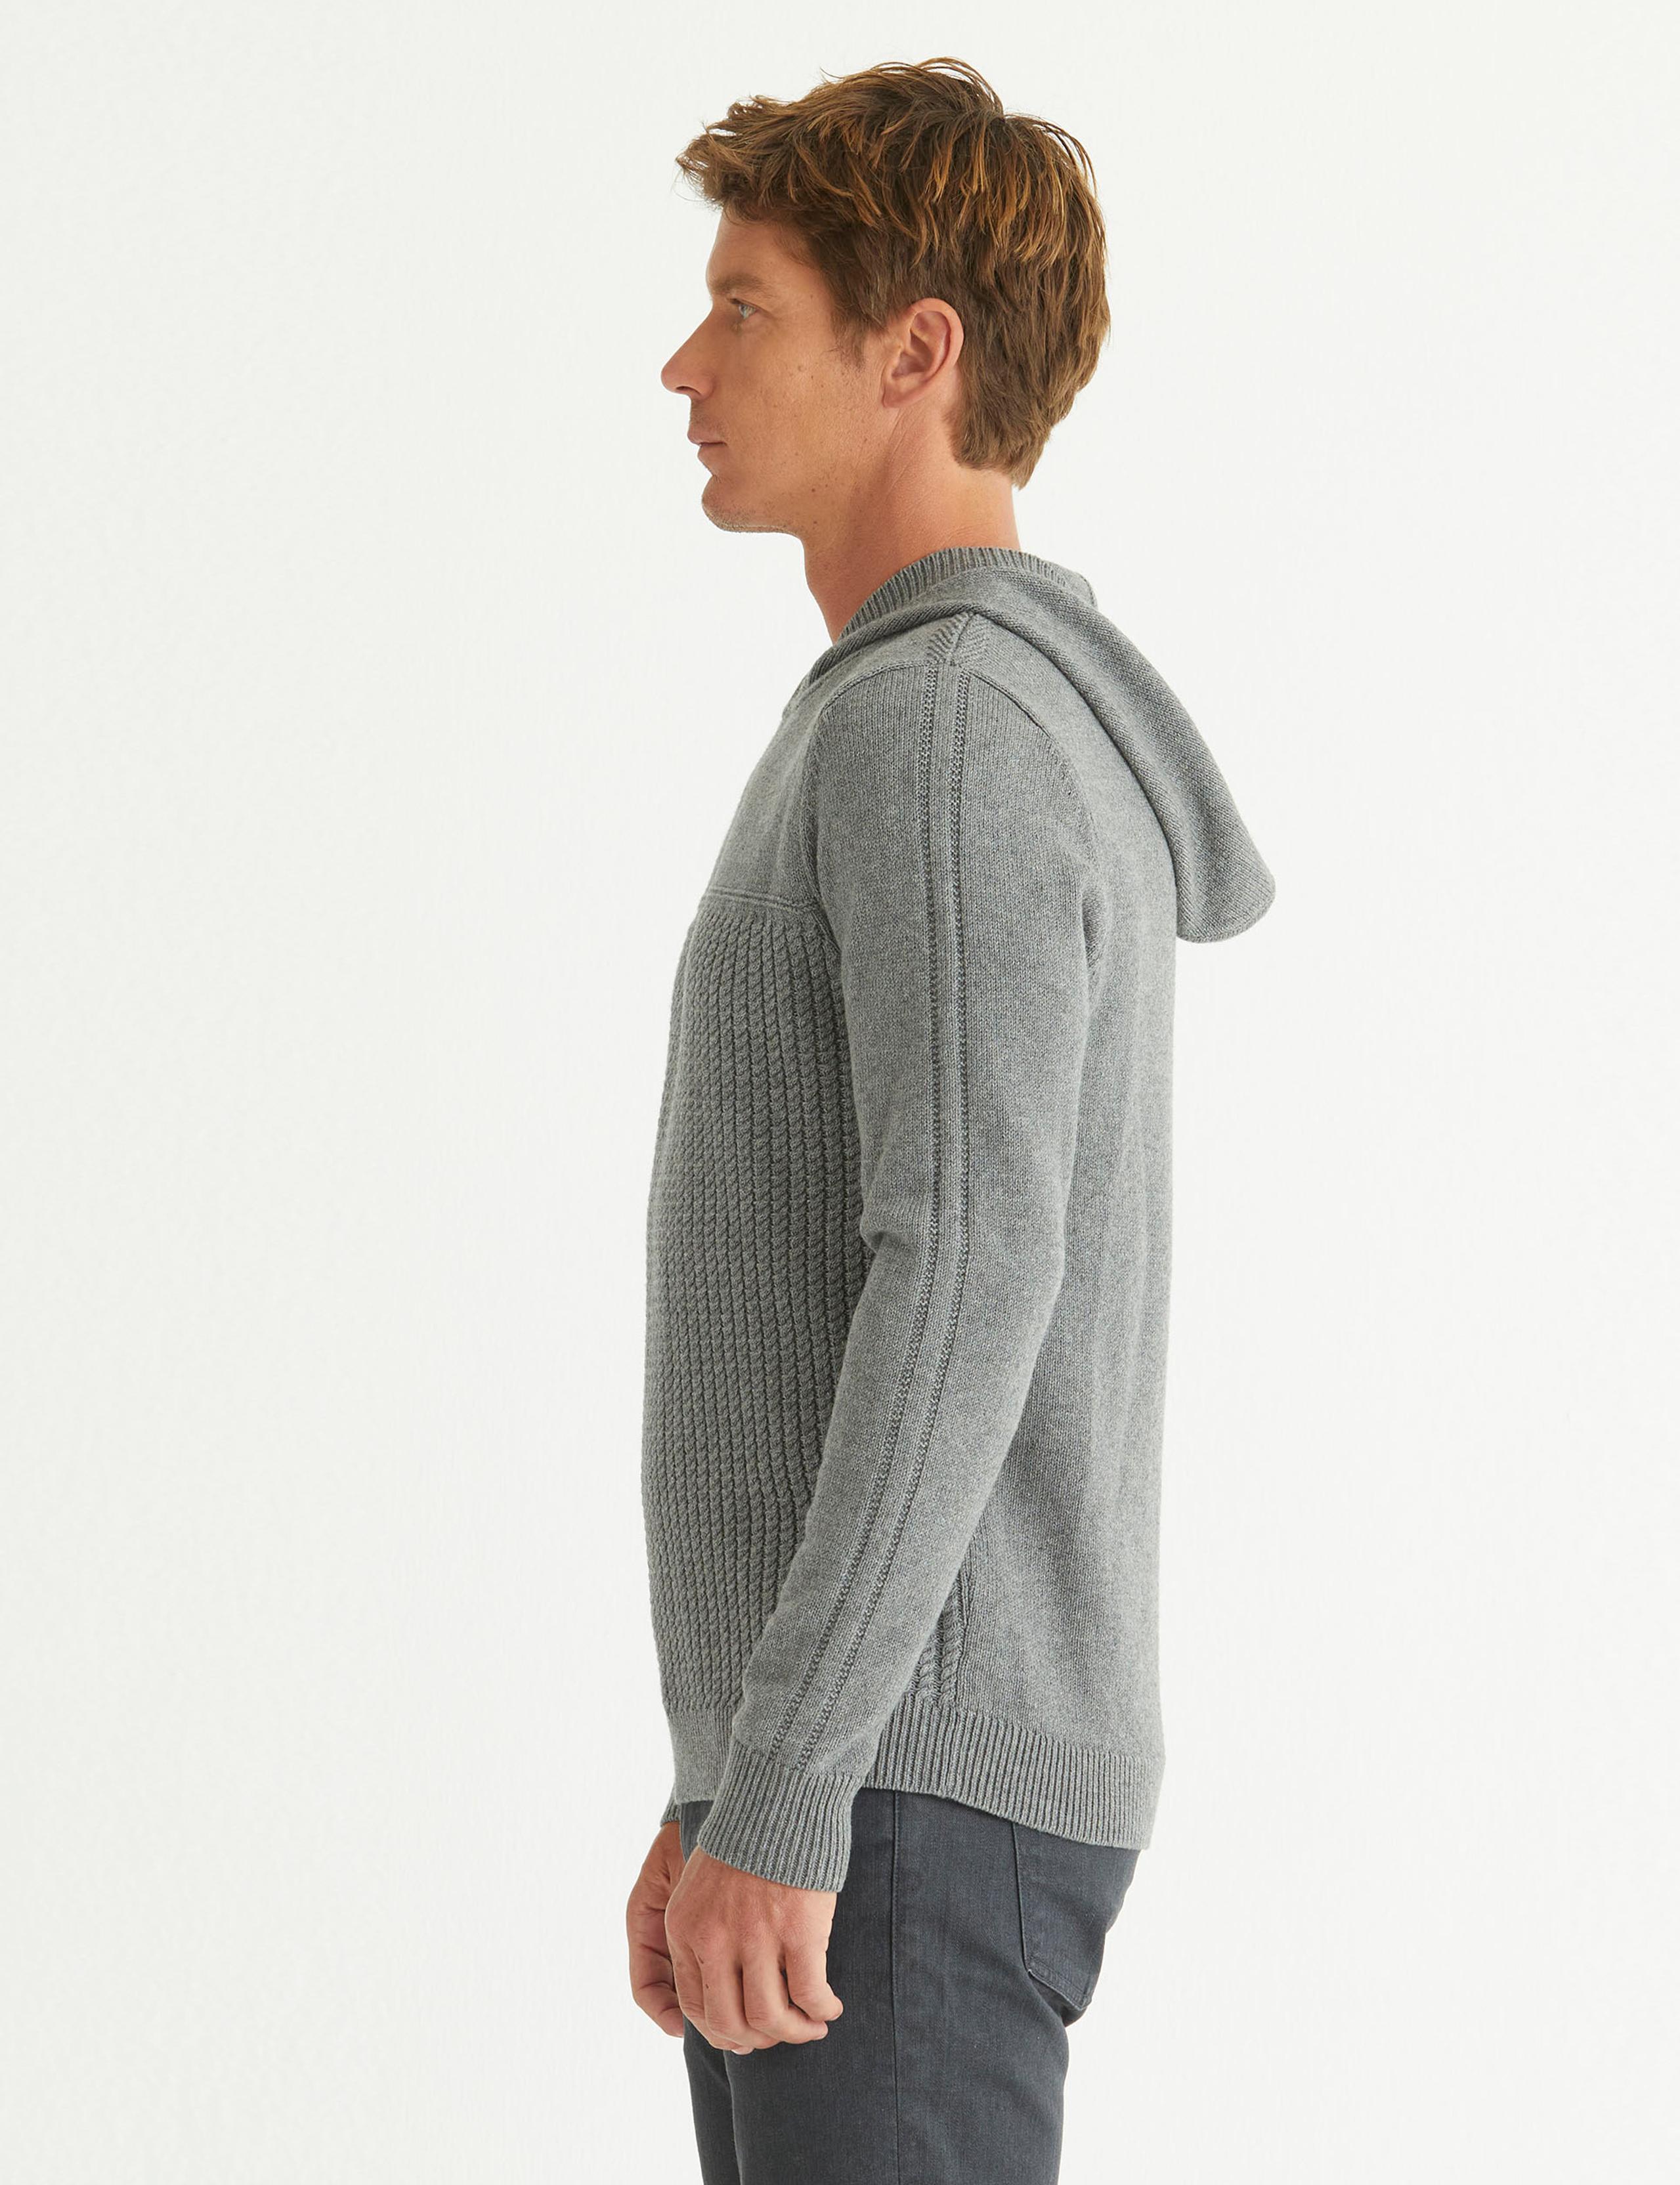 Men wearing Nash Hooded Sweater